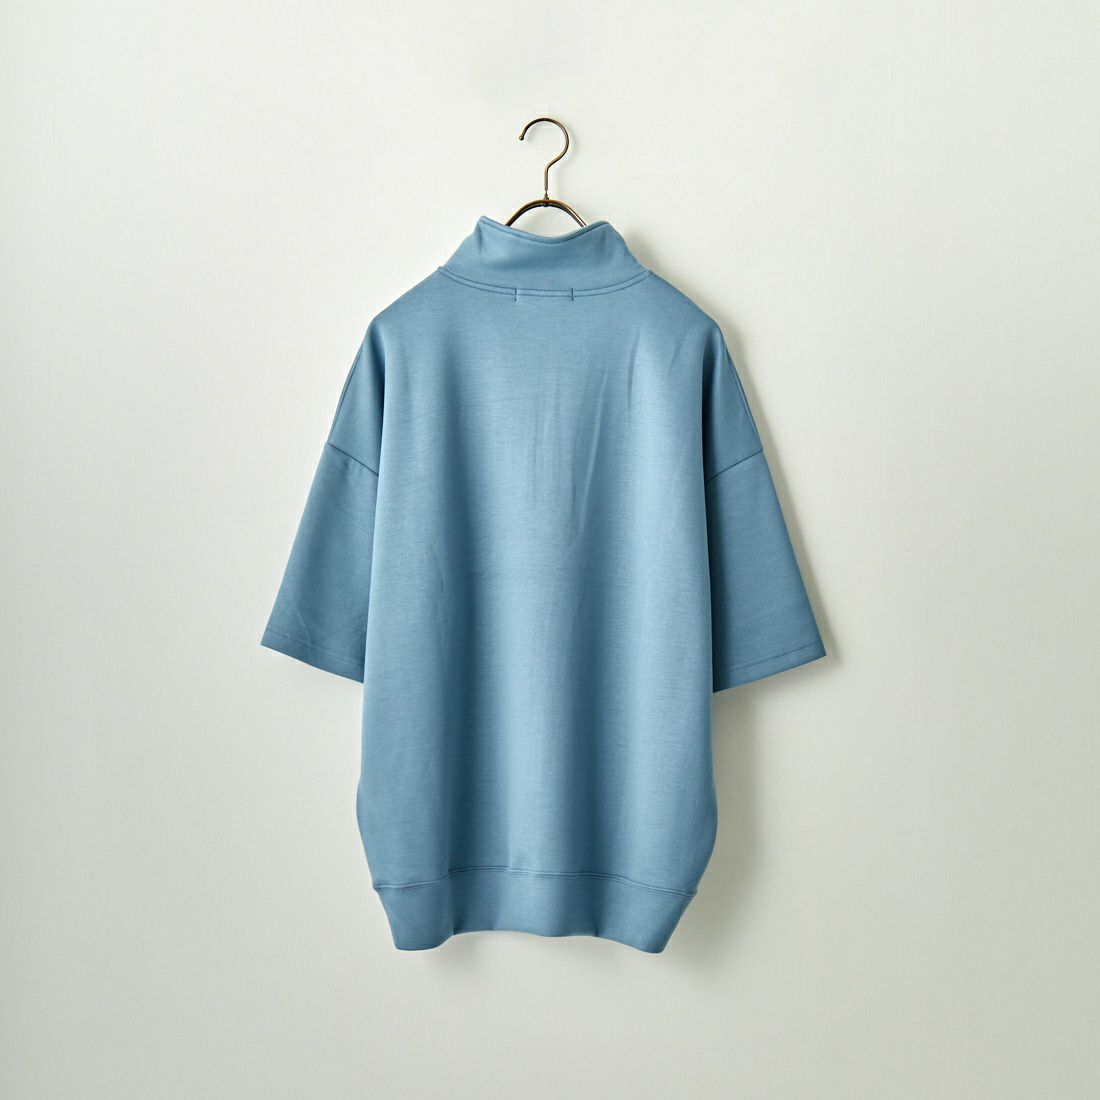 Jeans Factory Clothes [ジーンズファクトリークローズ] ハイポンチハーフジップTシャツ [JFC-232-061] BLUE